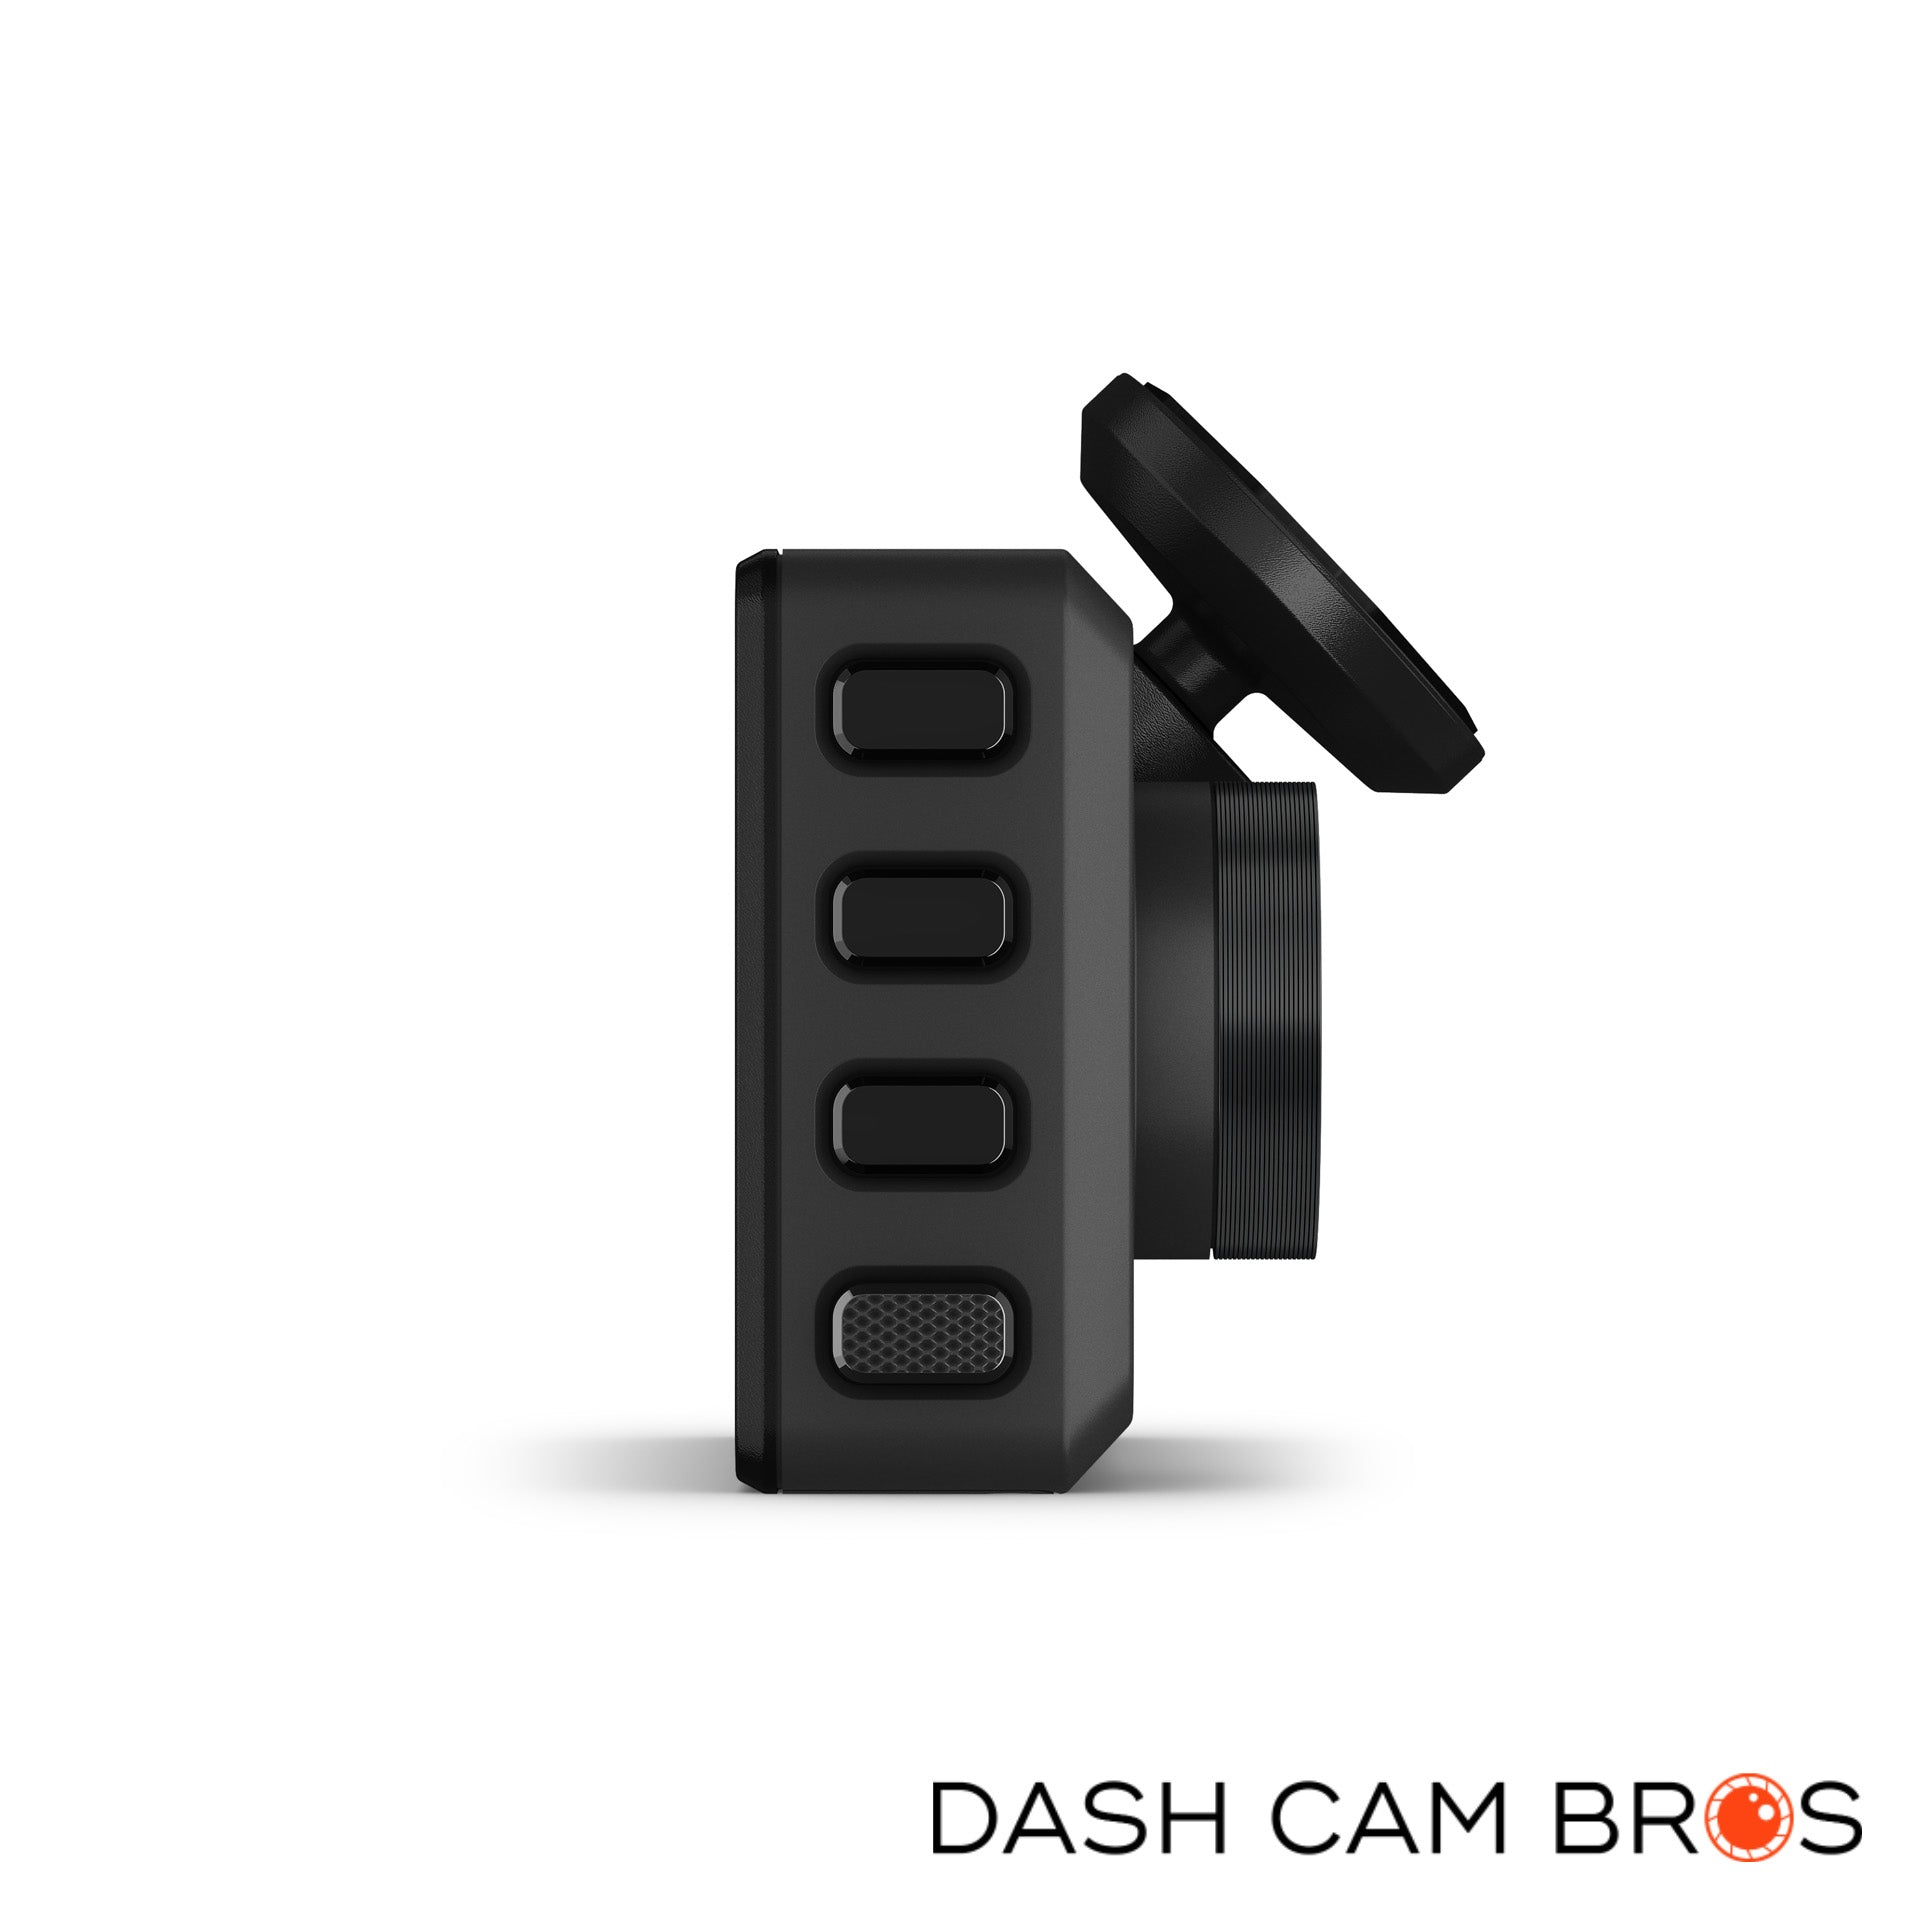 Garmin - Dash Cam 56